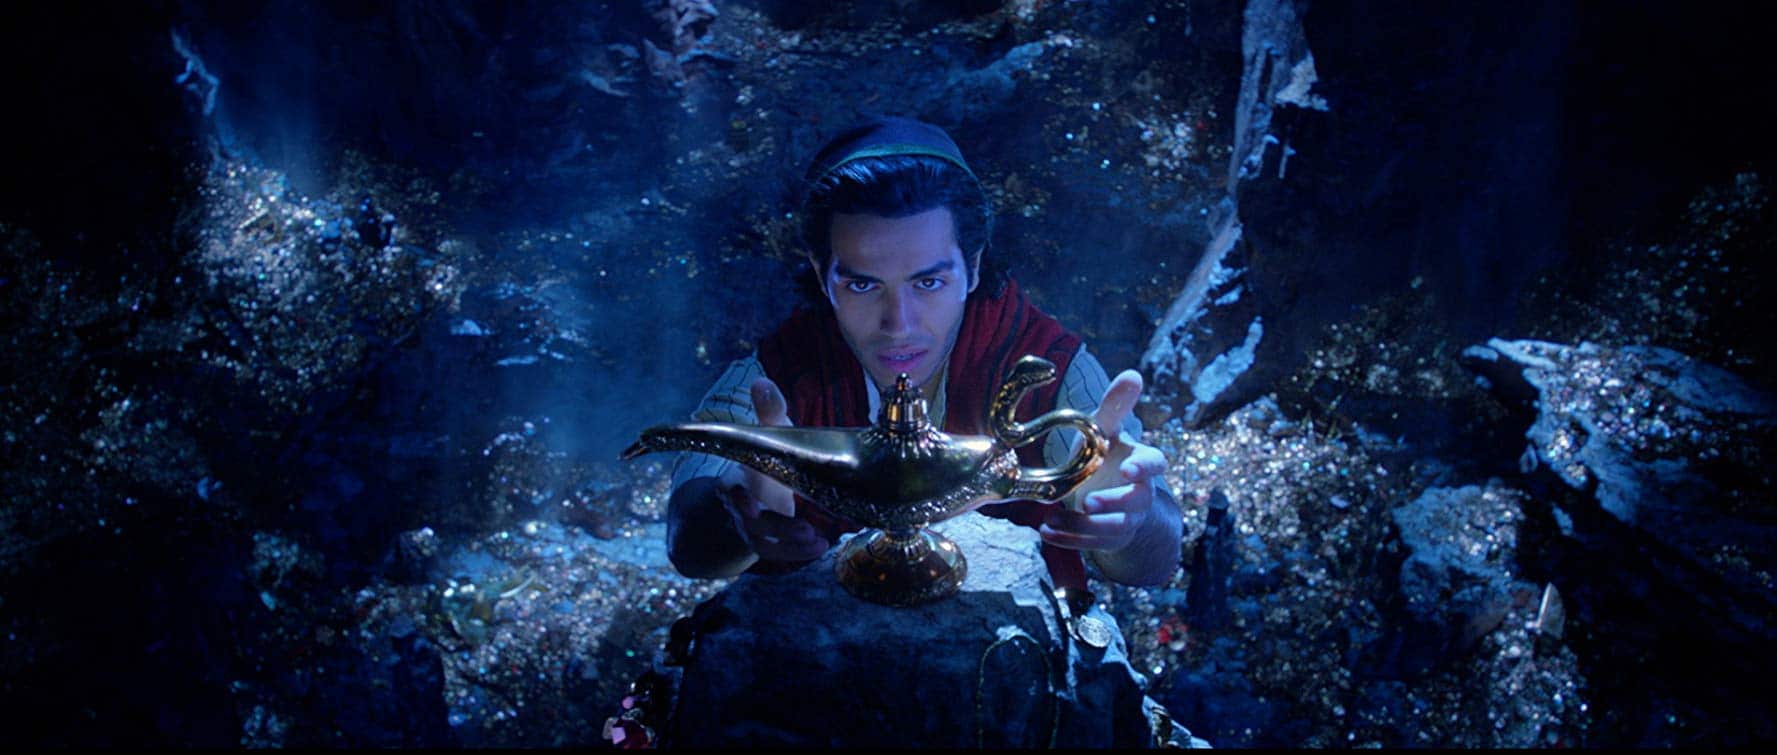 Aladdin 2019 Non Spoiler Review The Cinema Spot 